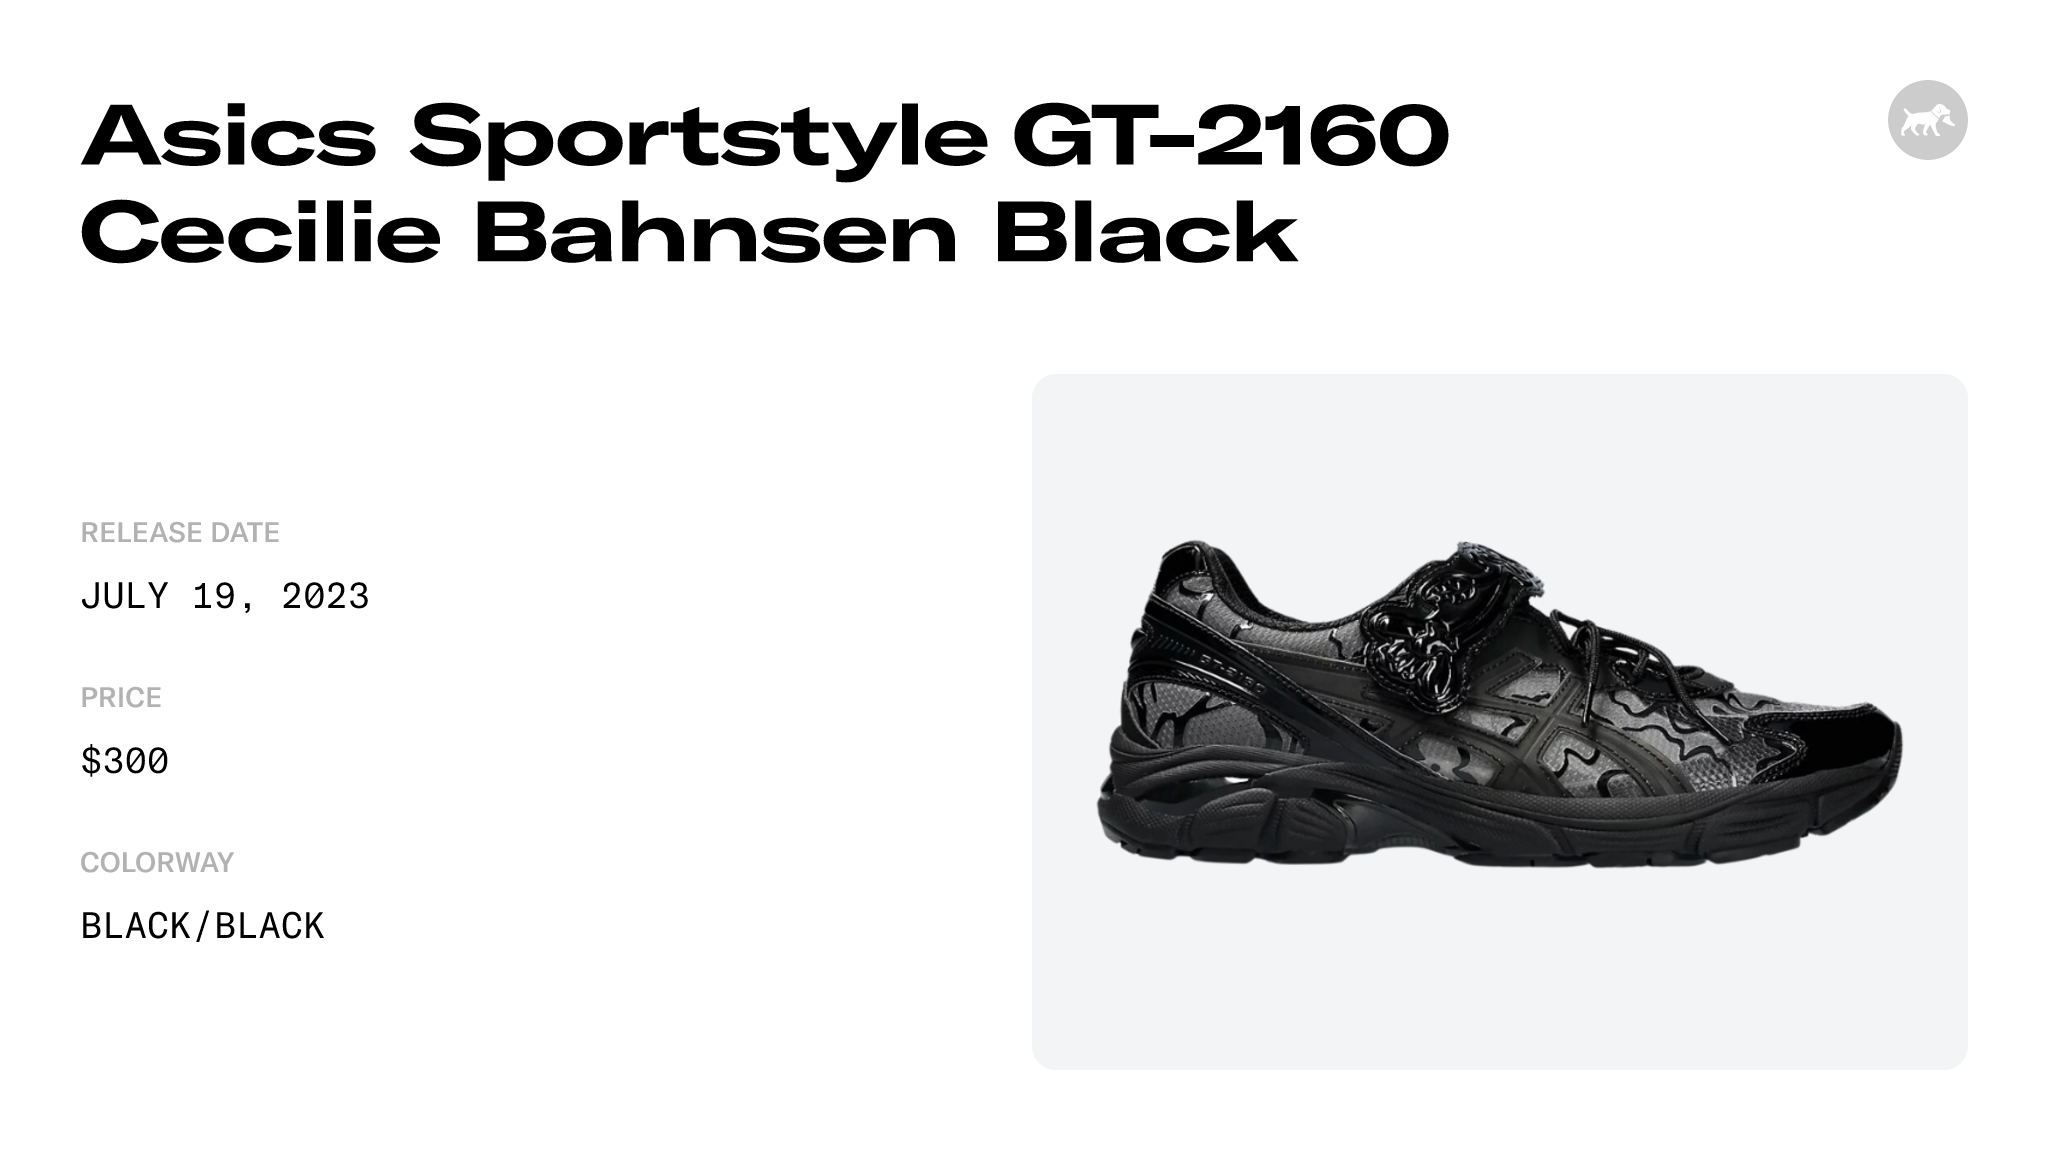 Asics Sportstyle GT-2160 Cecilie Bahnsen Black - 1203A321-001